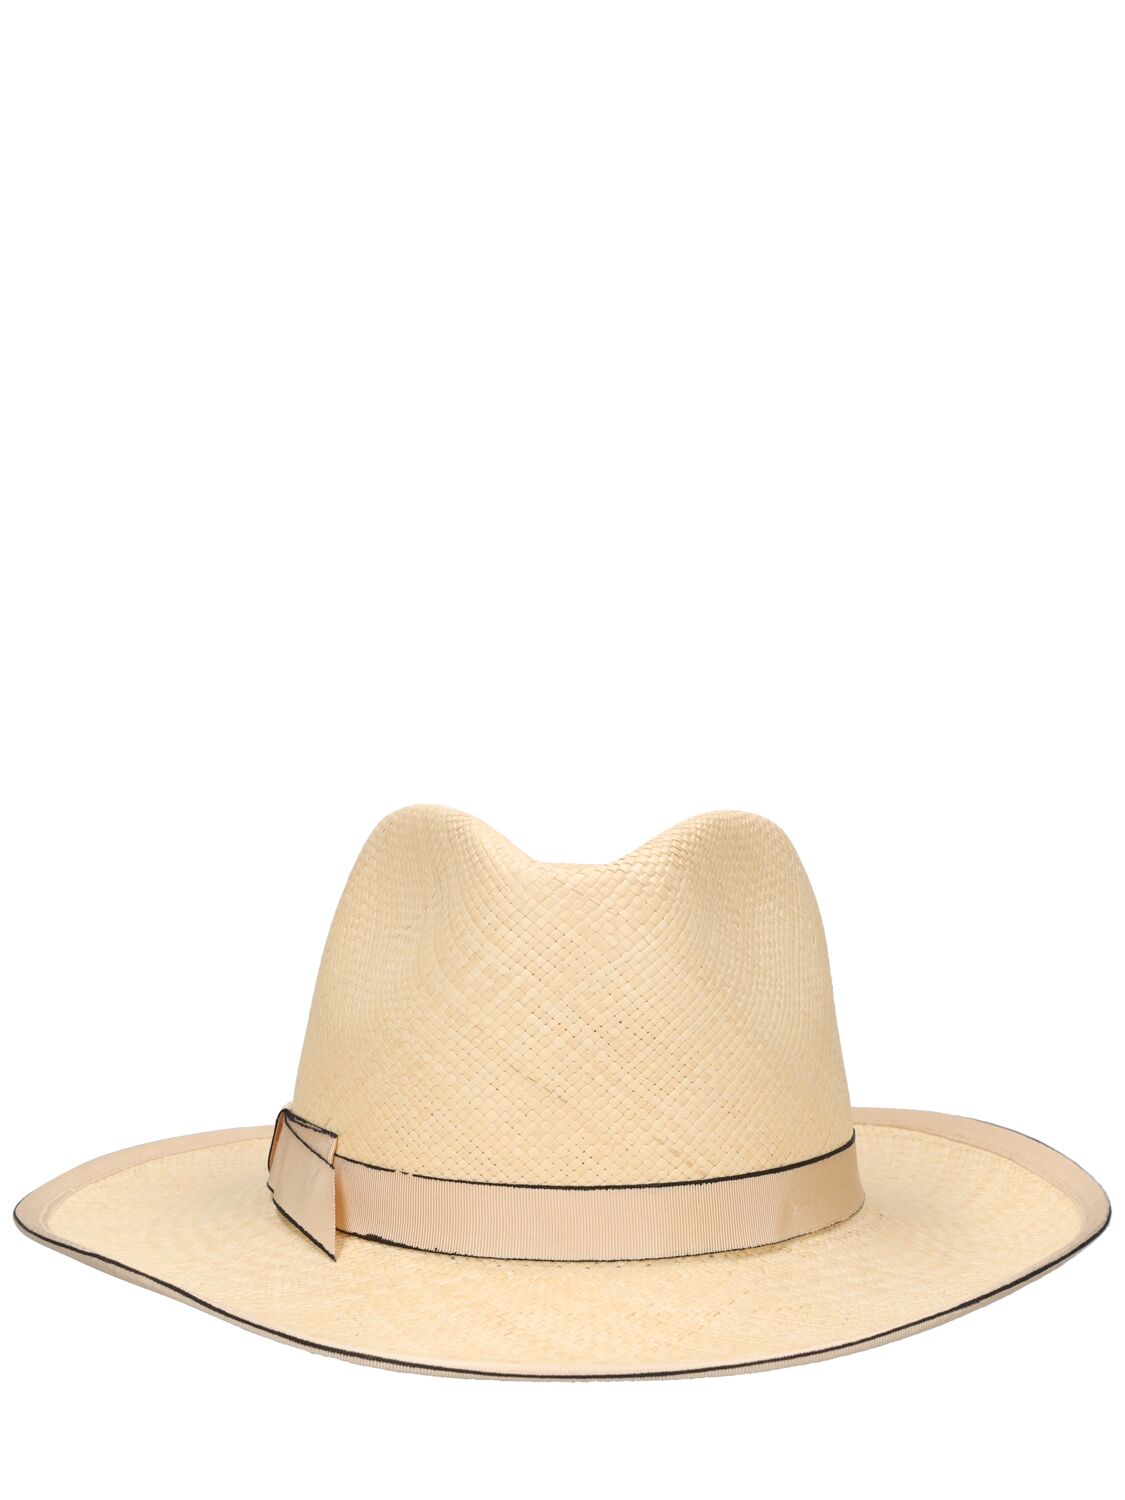 Image of Lewis Straw Panama Hat